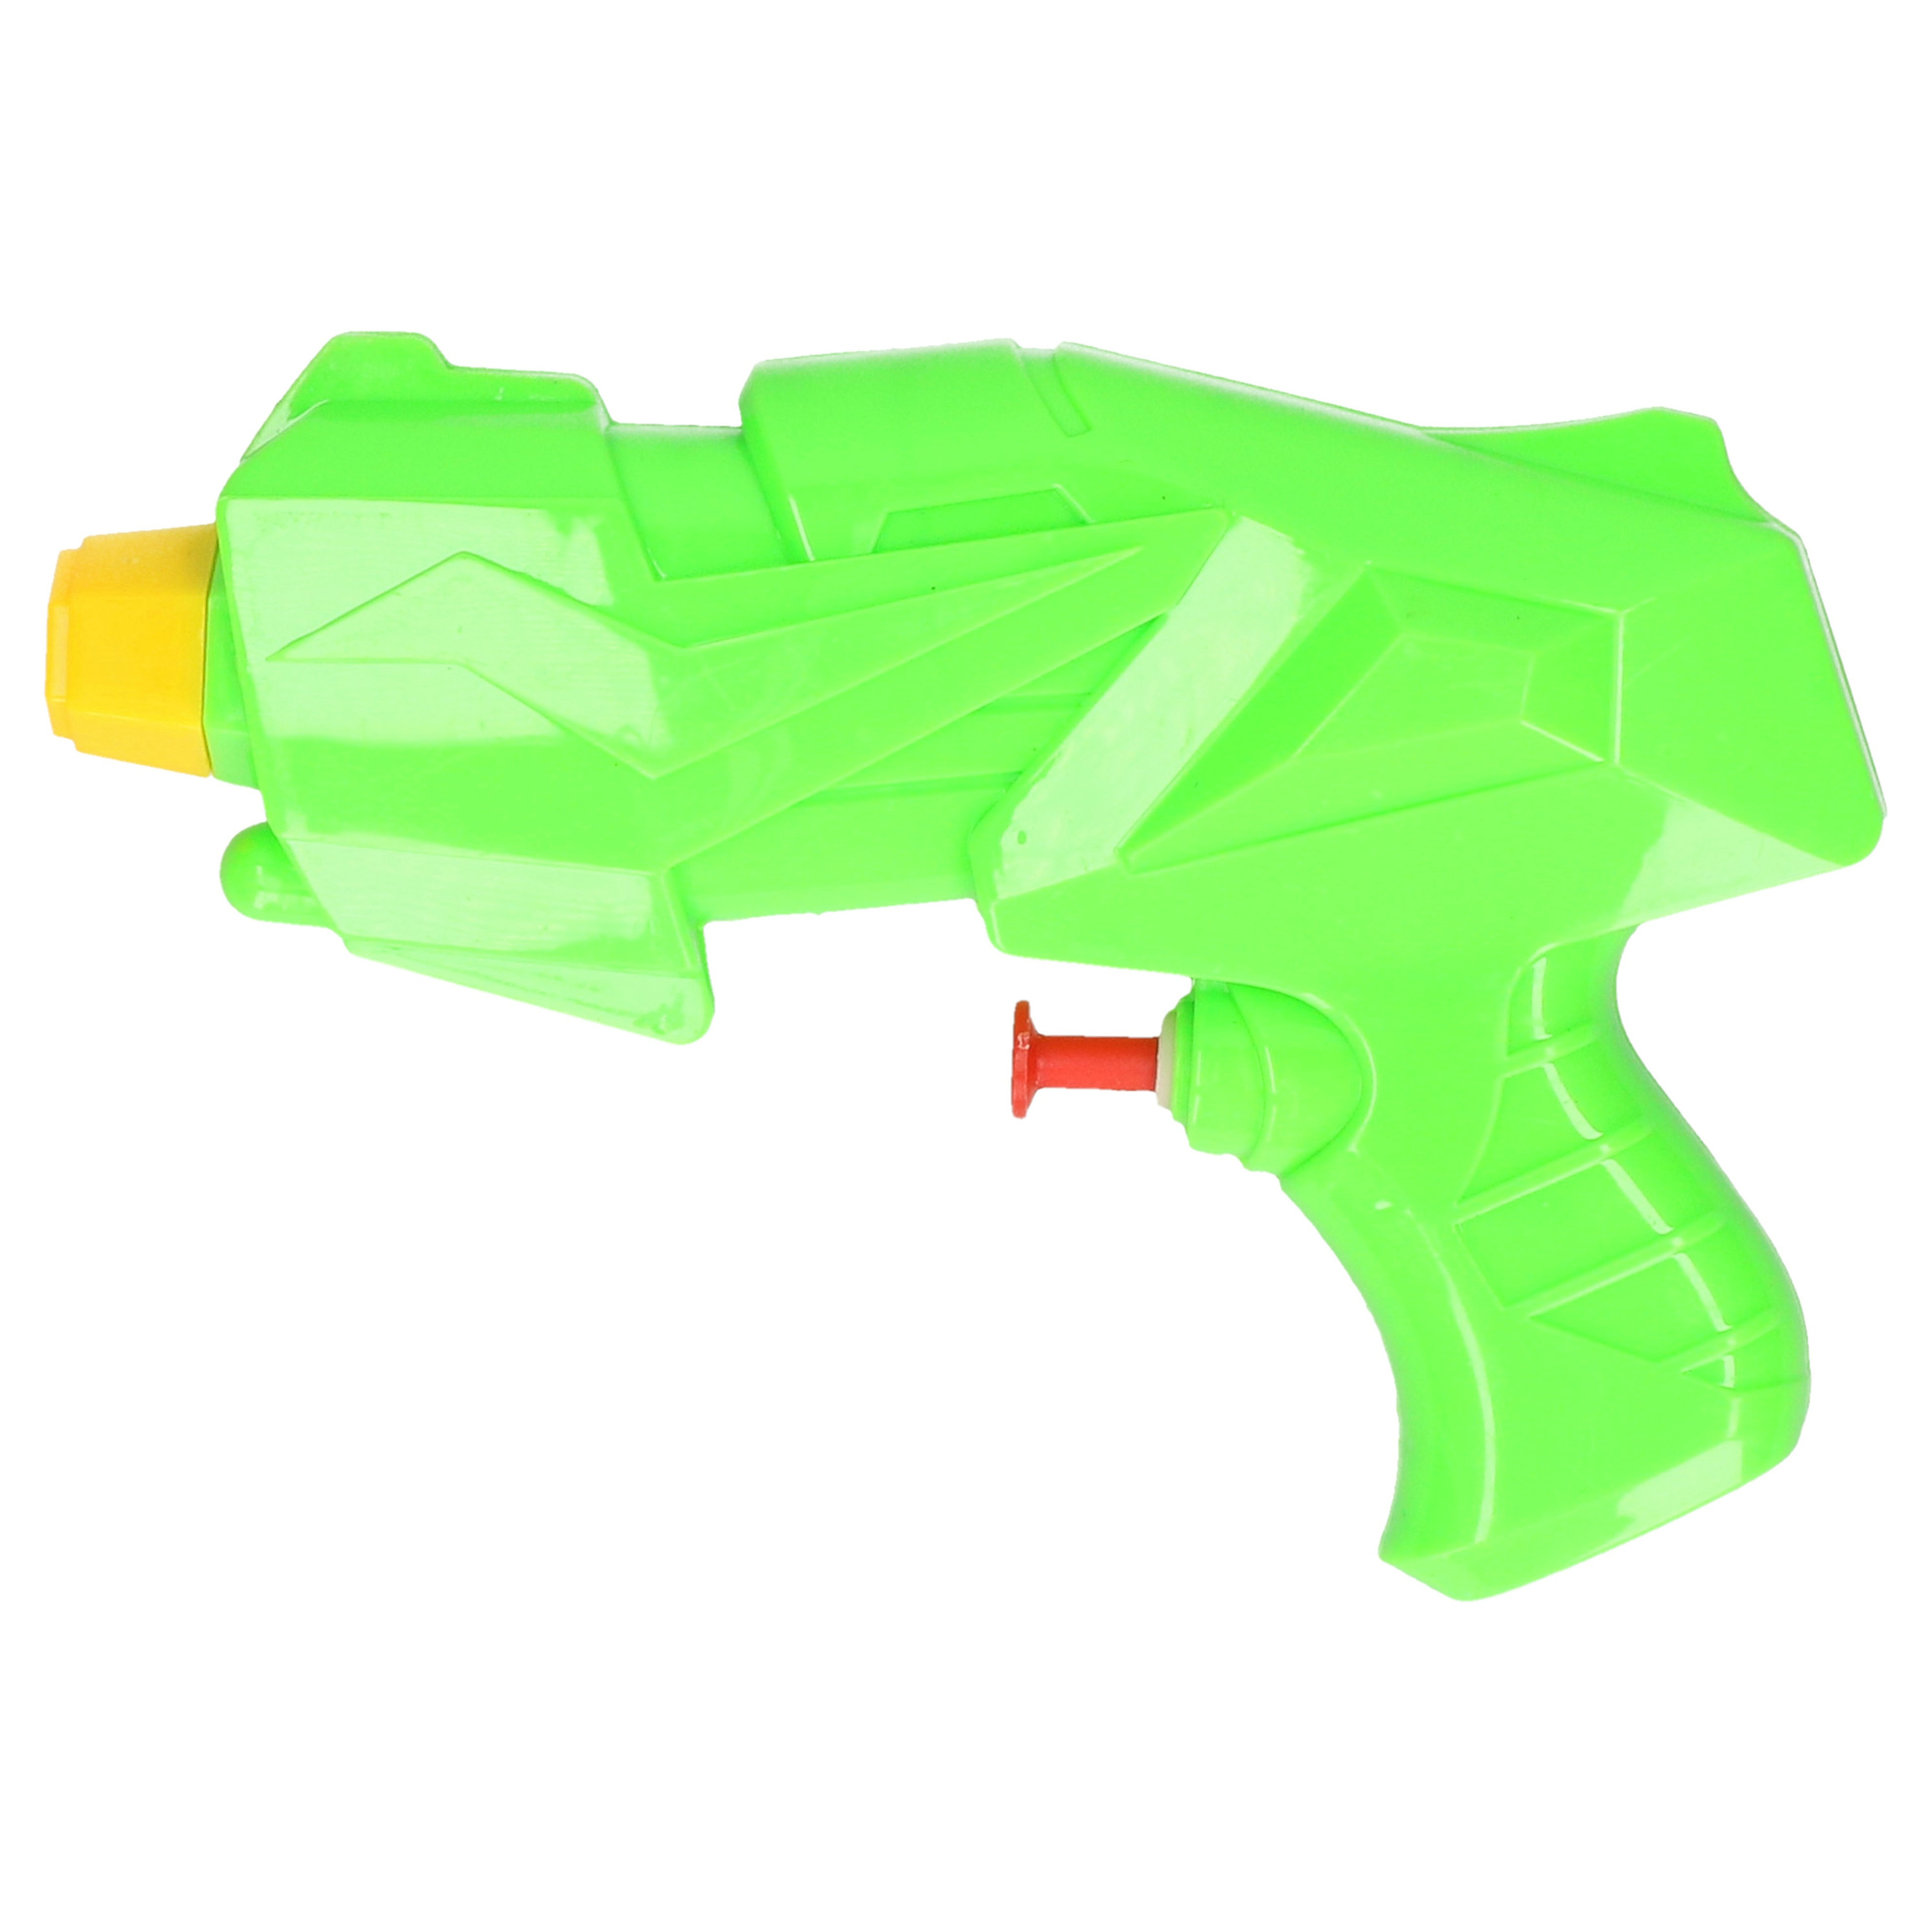 1x Mini waterpistooltje-waterpistolen 15 cm groen